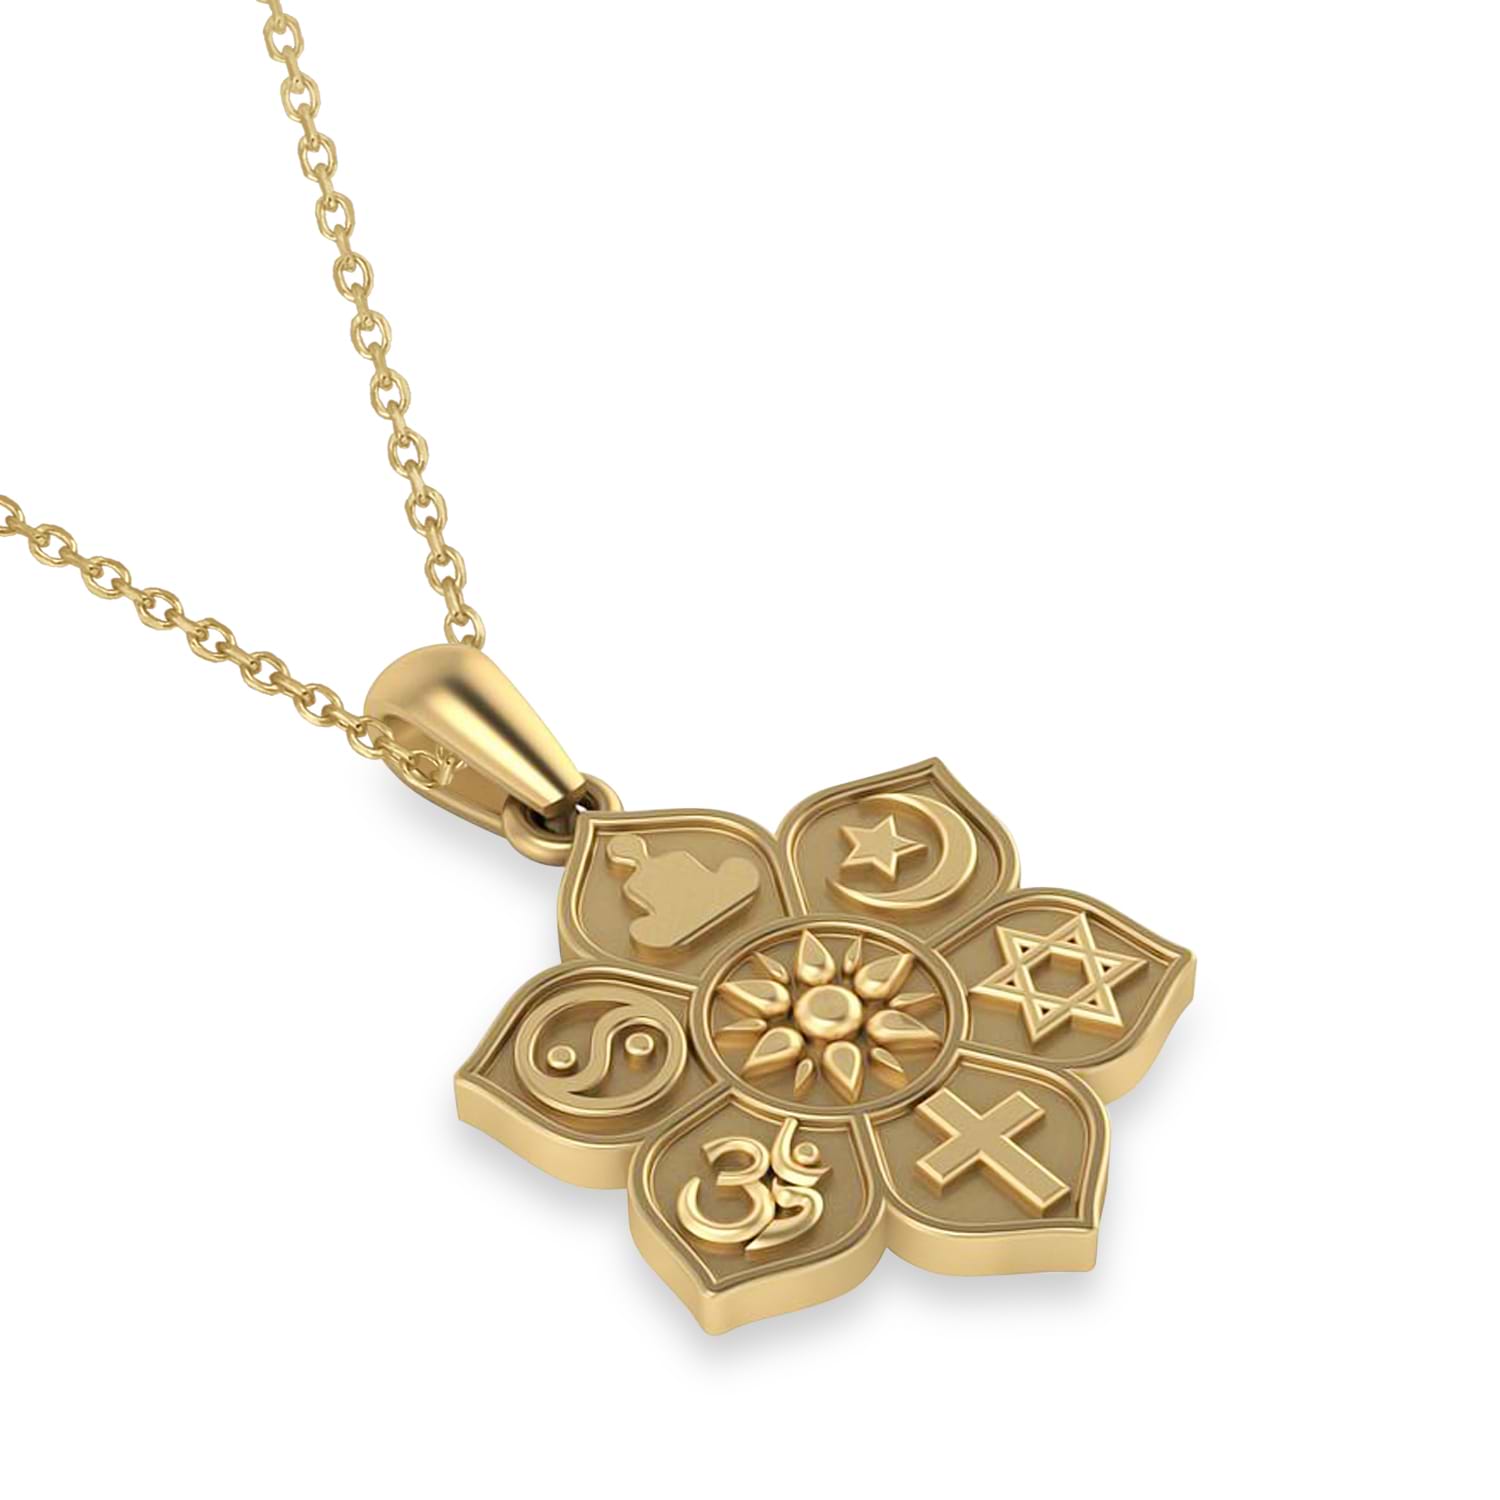 Coexist Symbols on Lotus Flower Pendant Necklace 14k Yellow Gold